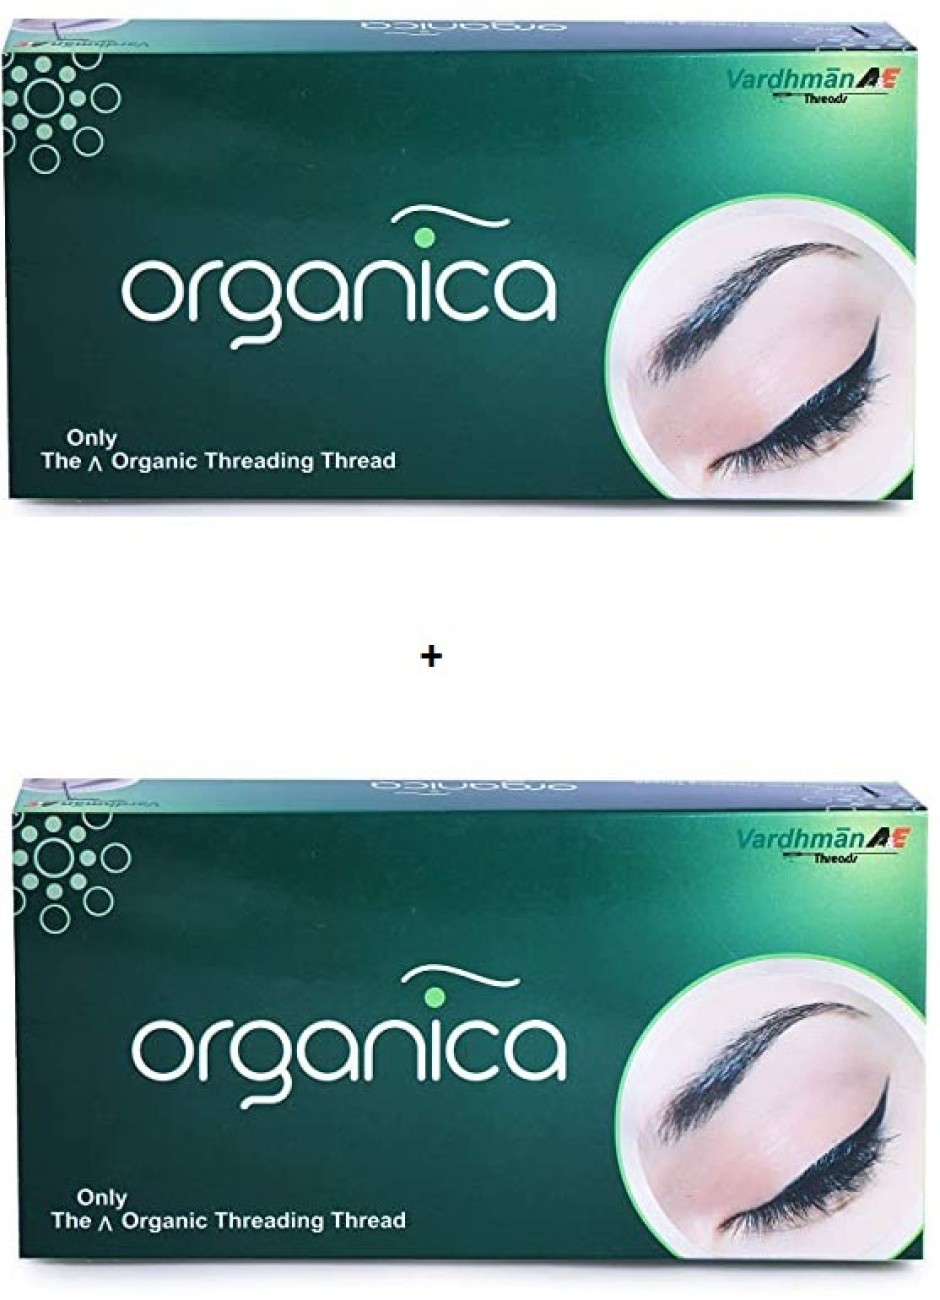 8*300M Spool Organic Eyebrow Threading Thread Organica Eyebrow Threading  Thread Facial Threading, Body Hair Threading & Sewing Thread, Pale Green